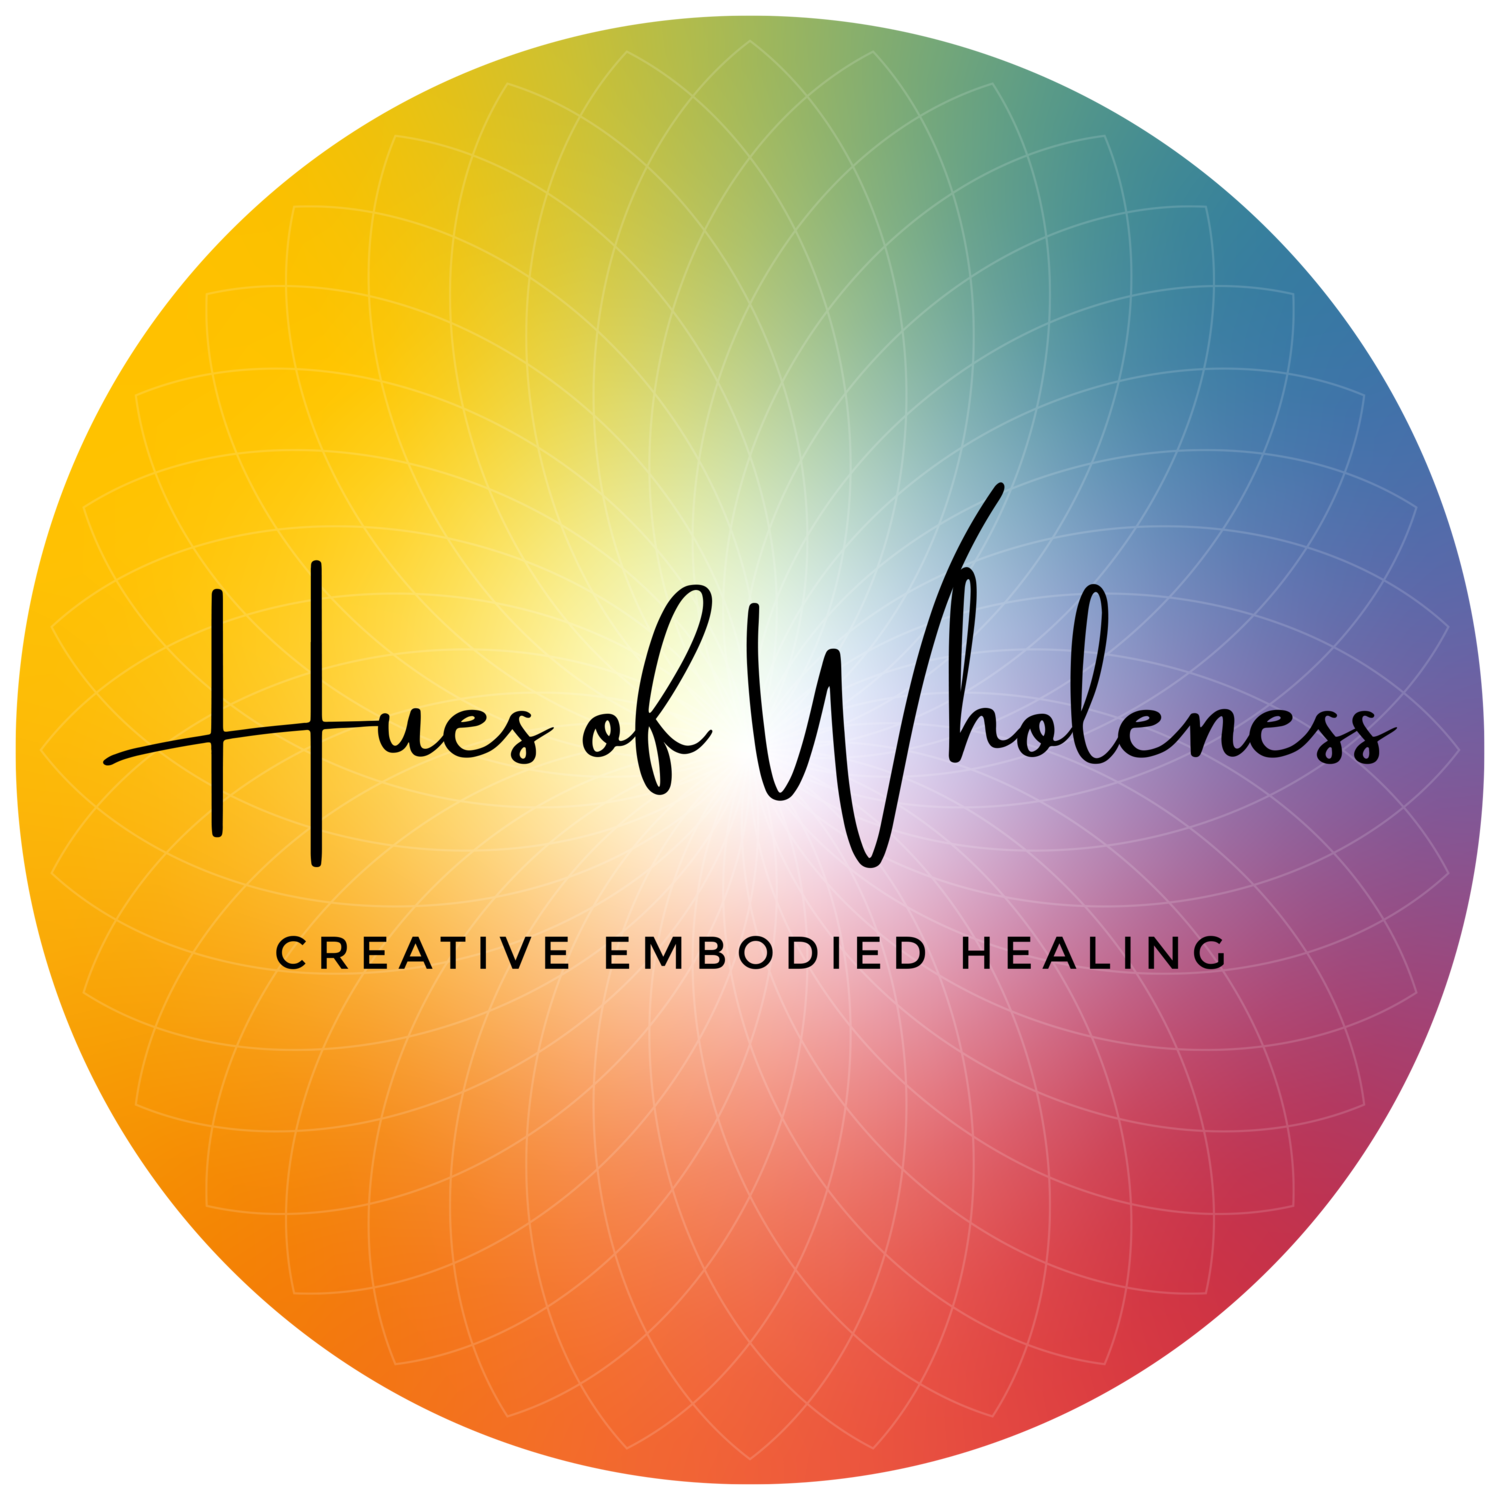 Hues of Wholeness